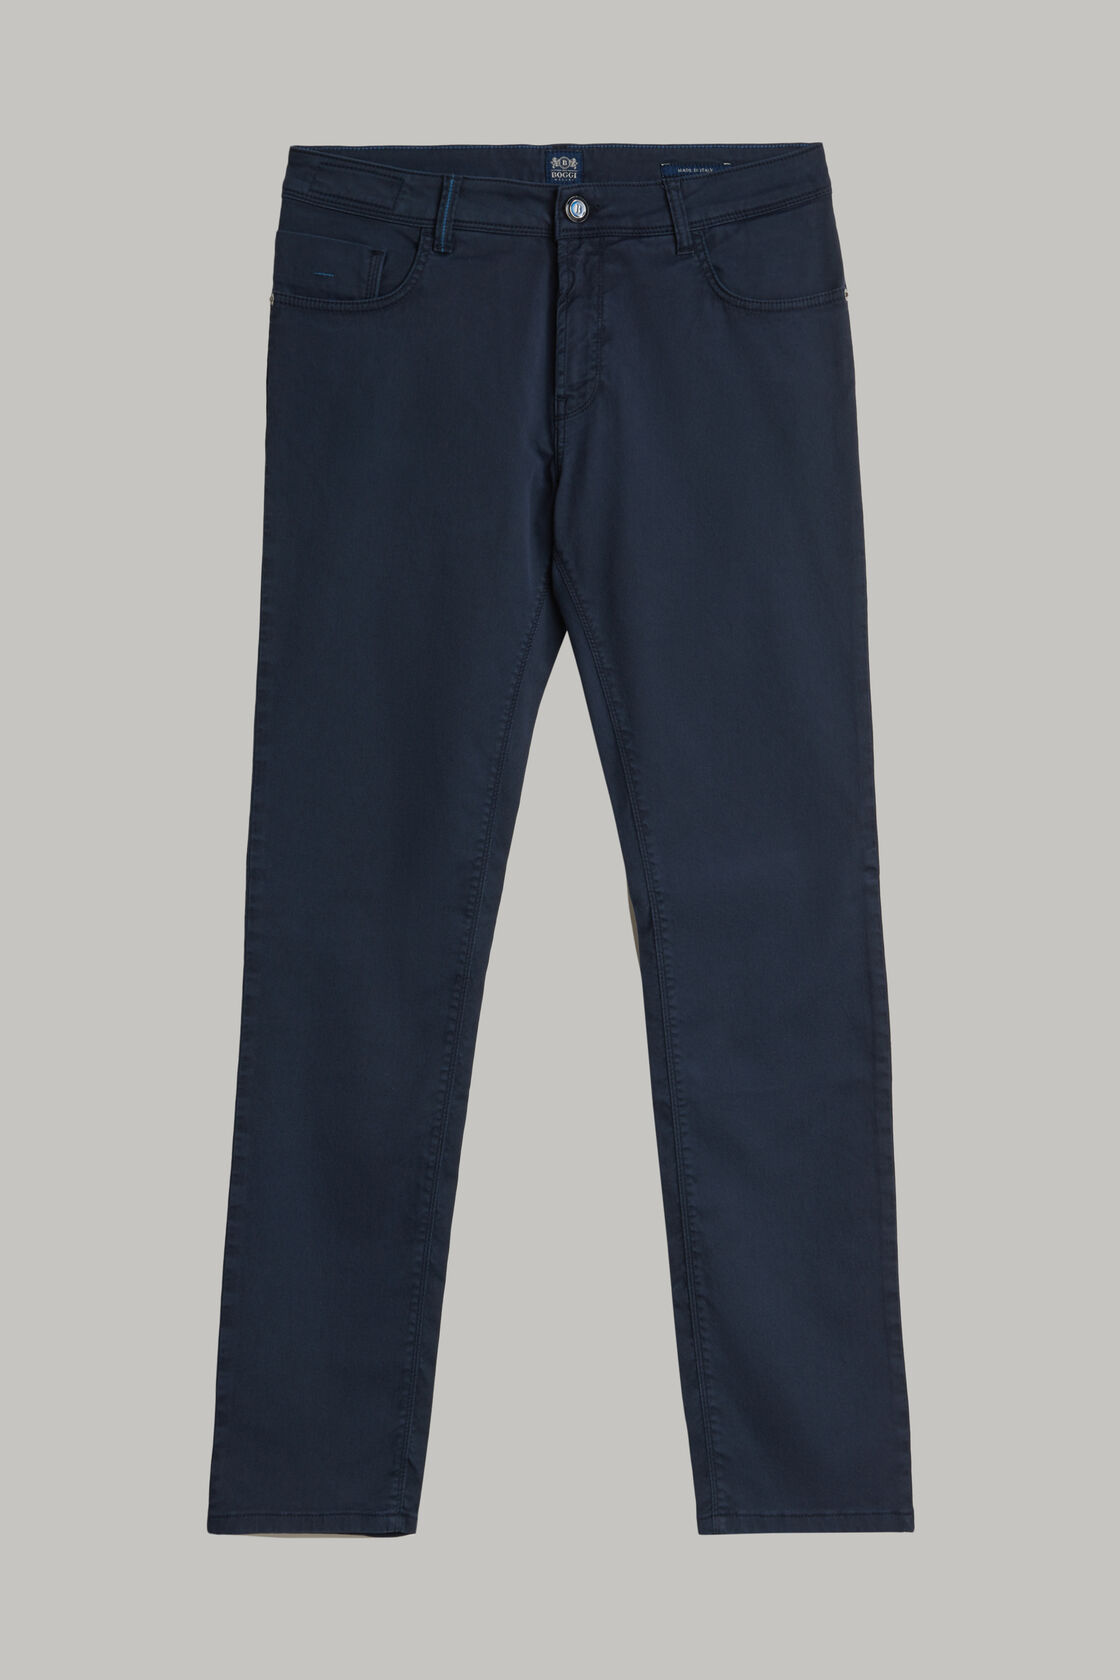 Beige jeans in stretch tencel cotton, Navy blue, hi-res